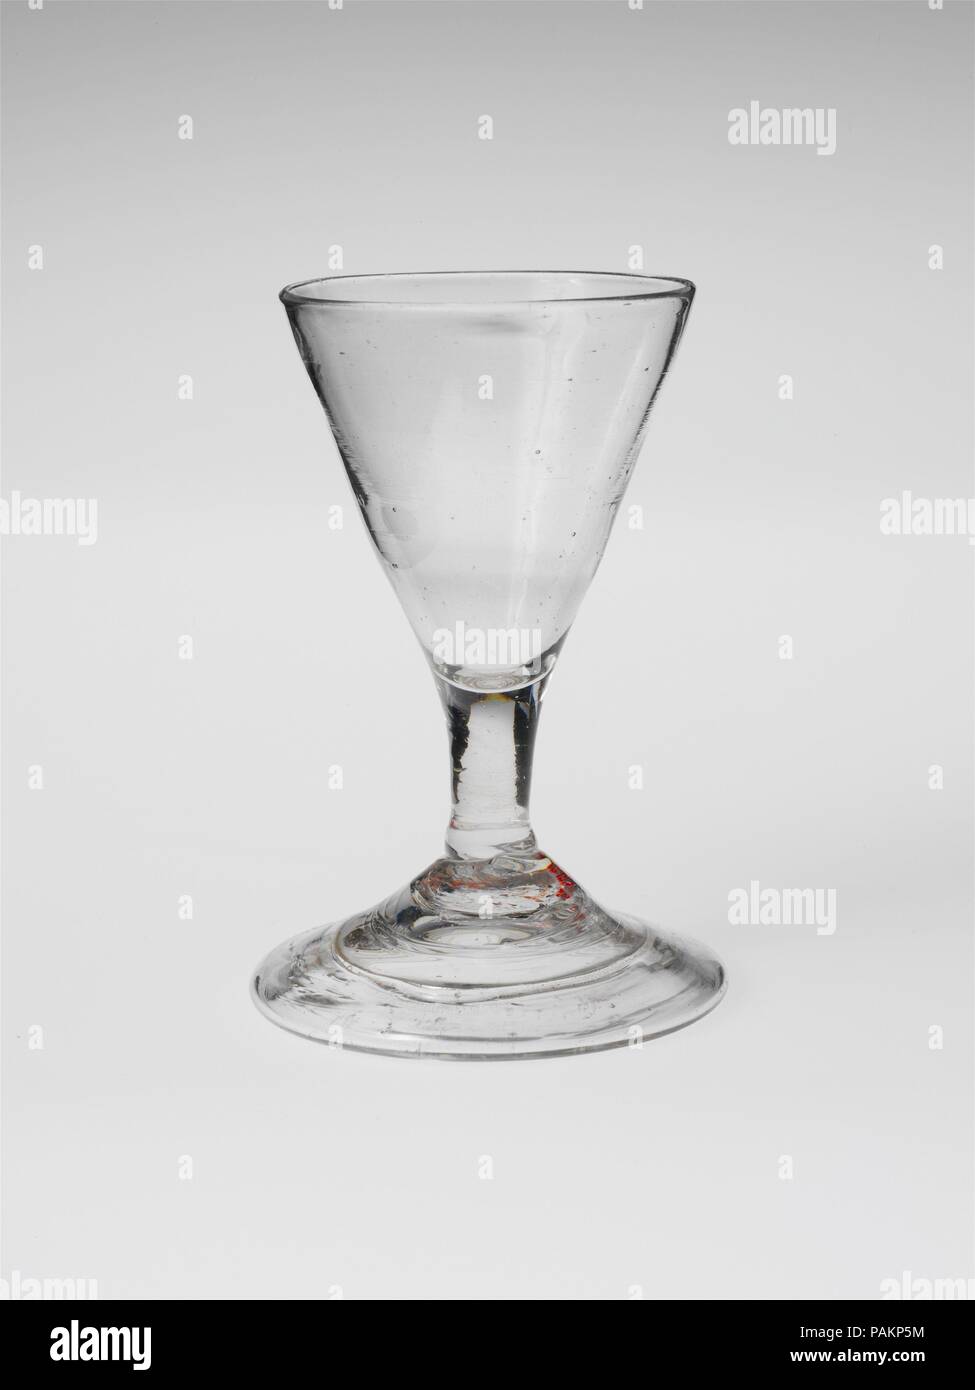 Bicchiere di vino. Cultura: British, probabilmente. Dimensioni: H. 4. (10,2 cm). Data: 1700-1800. Museo: Metropolitan Museum of Art di New York, Stati Uniti d'America. Foto Stock